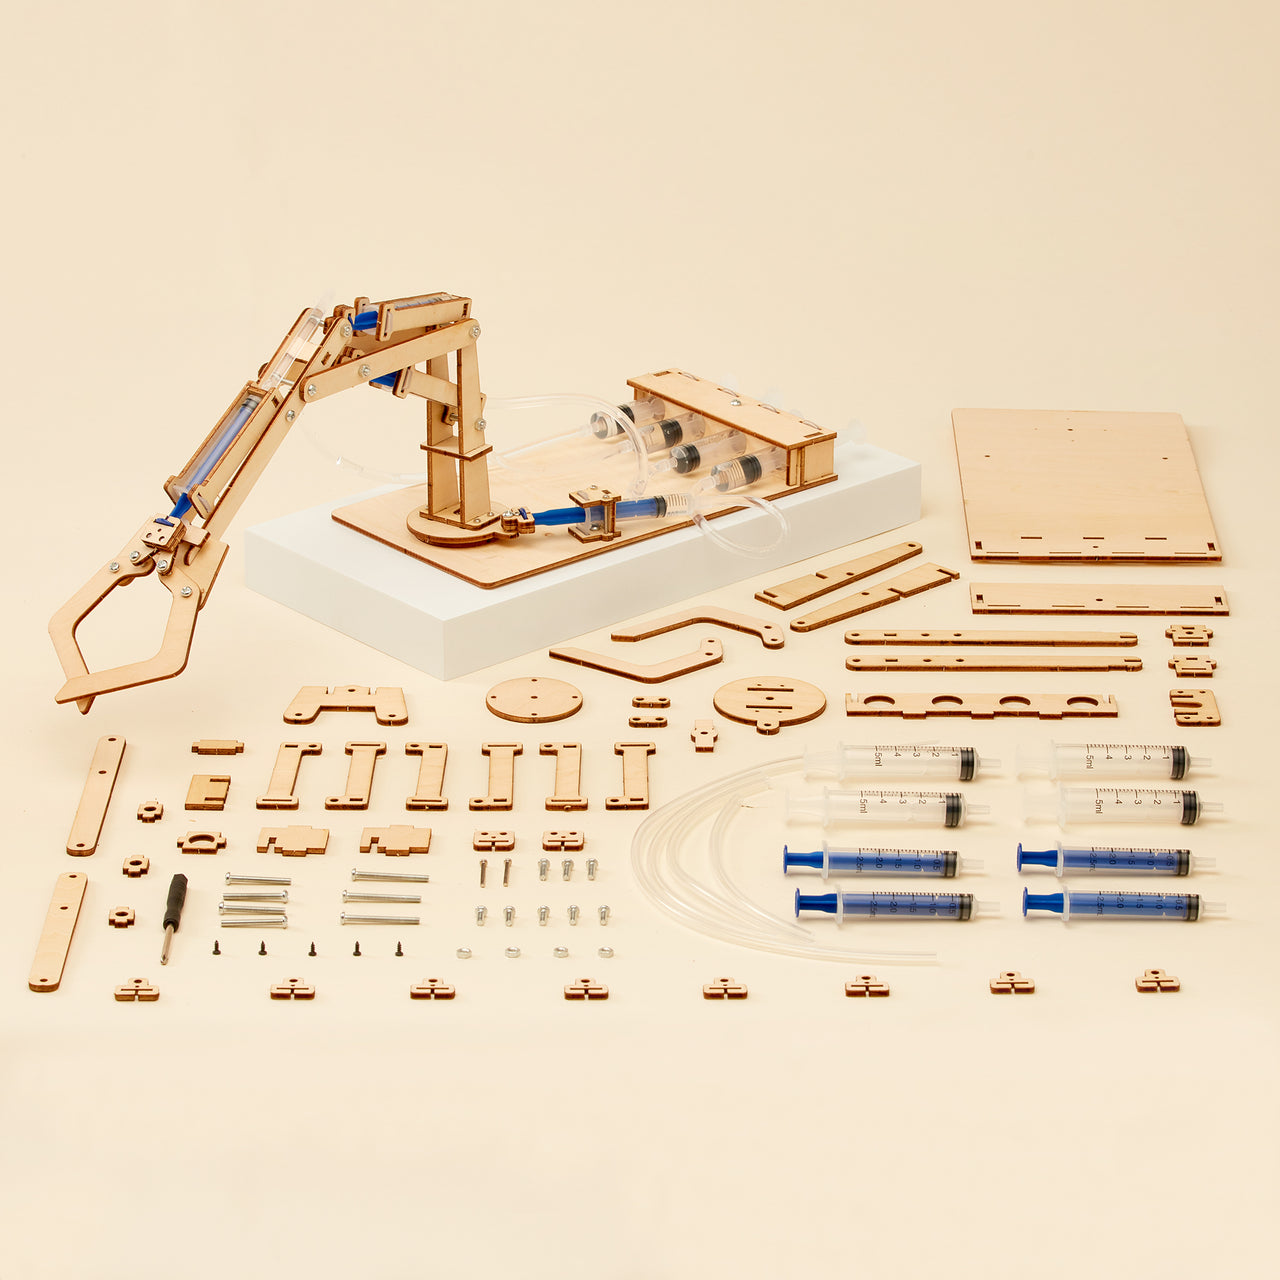 Kit de bricolage de bras robotique hydraulique CreateKit